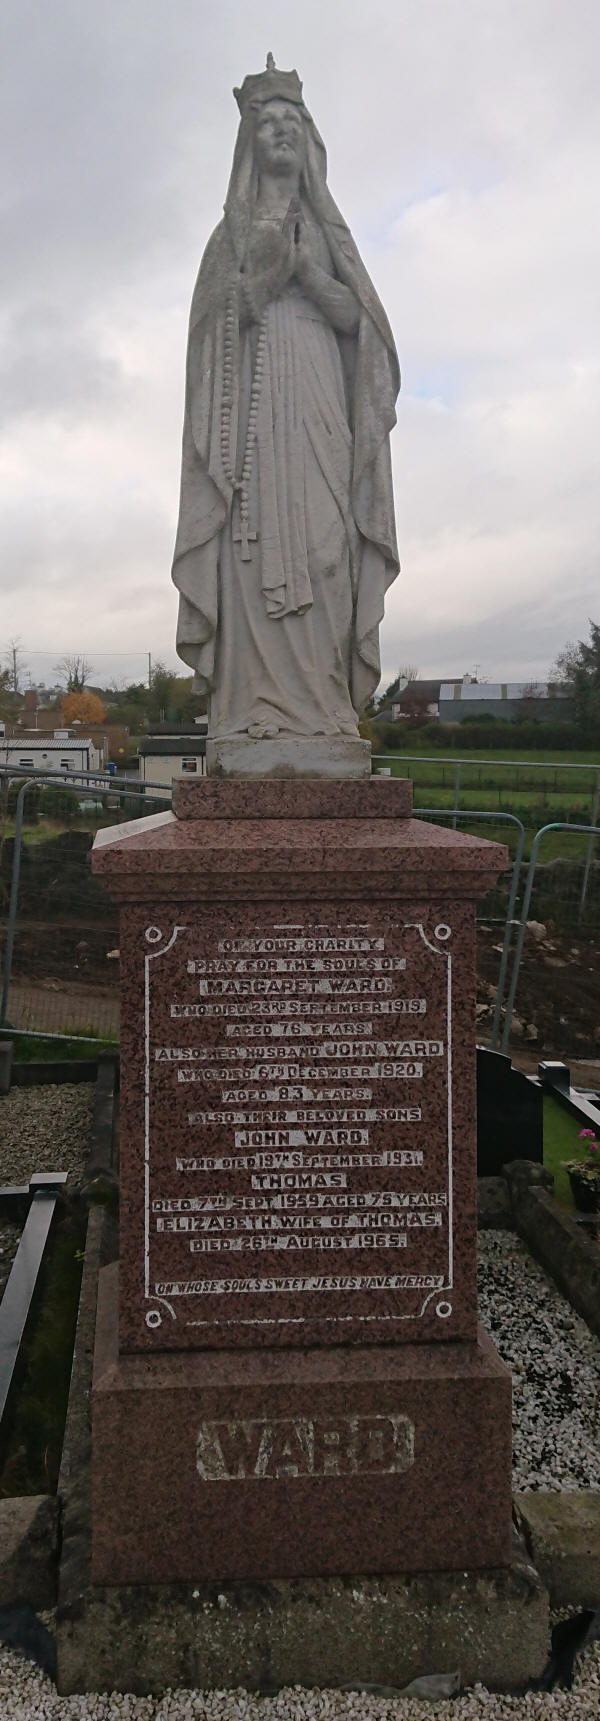 Ward MA Plot - The New Graveyard Lavey Parish Co Derry Ireland